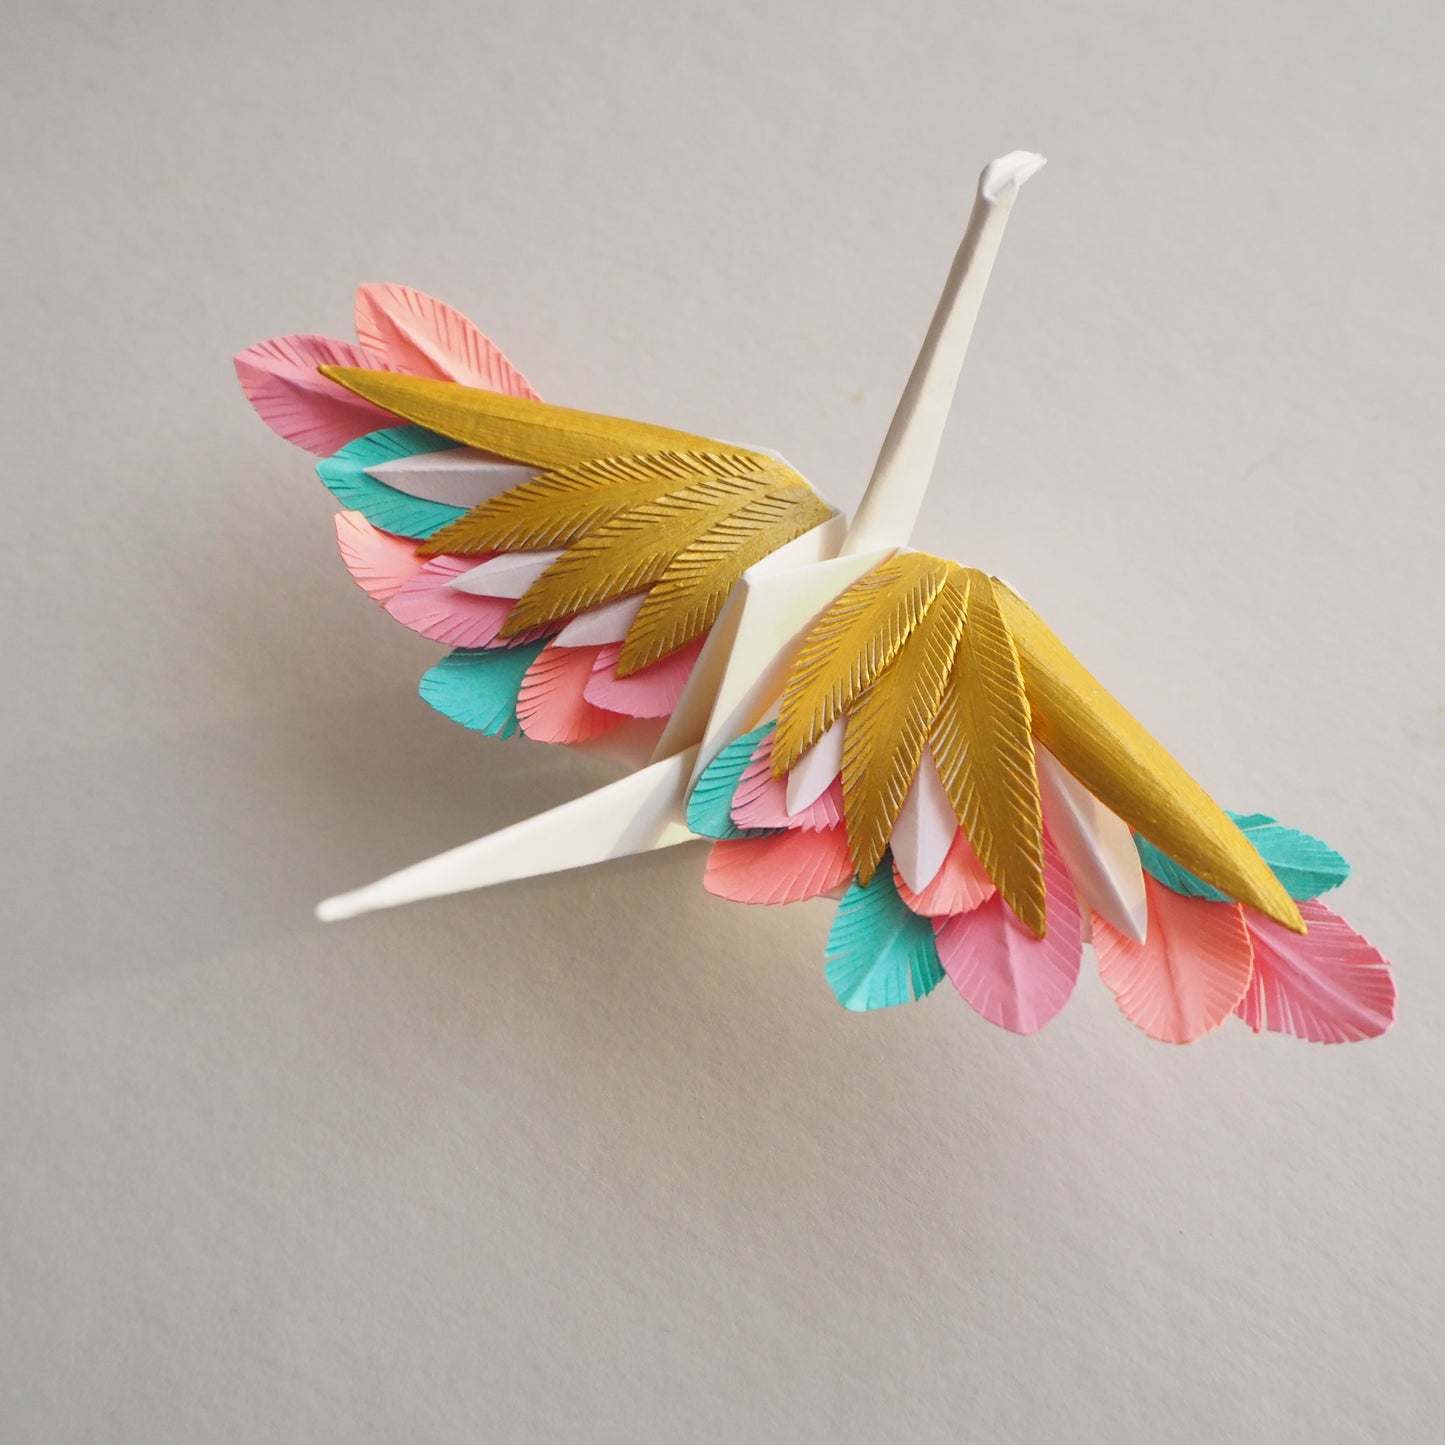 Origami Feathered Crane - Sun